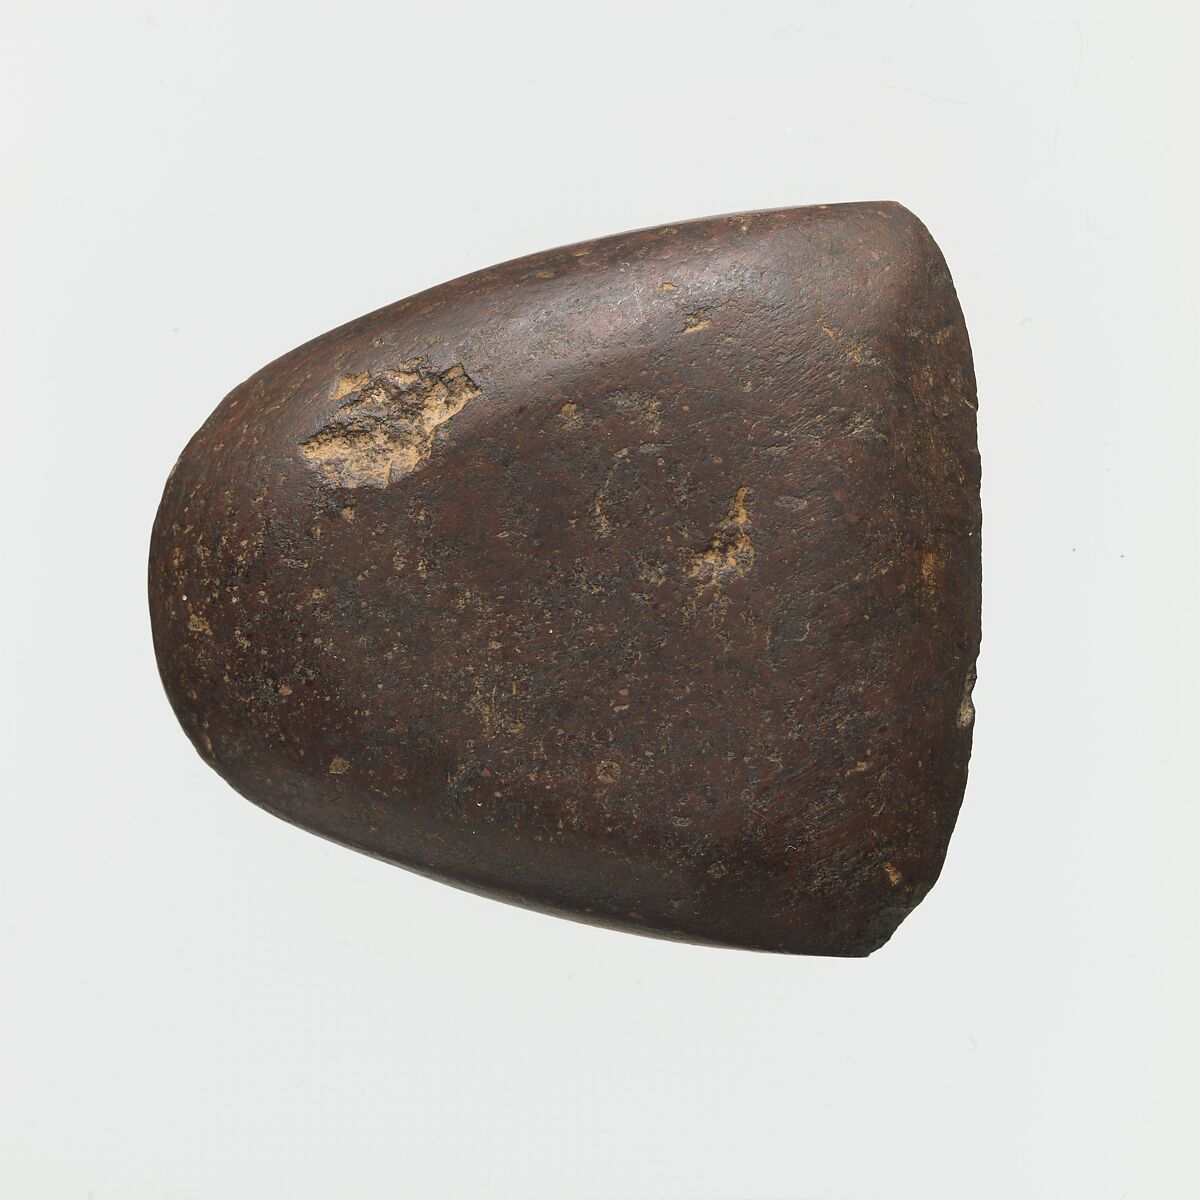 Small metabauxite axe, Stone, Cretan 